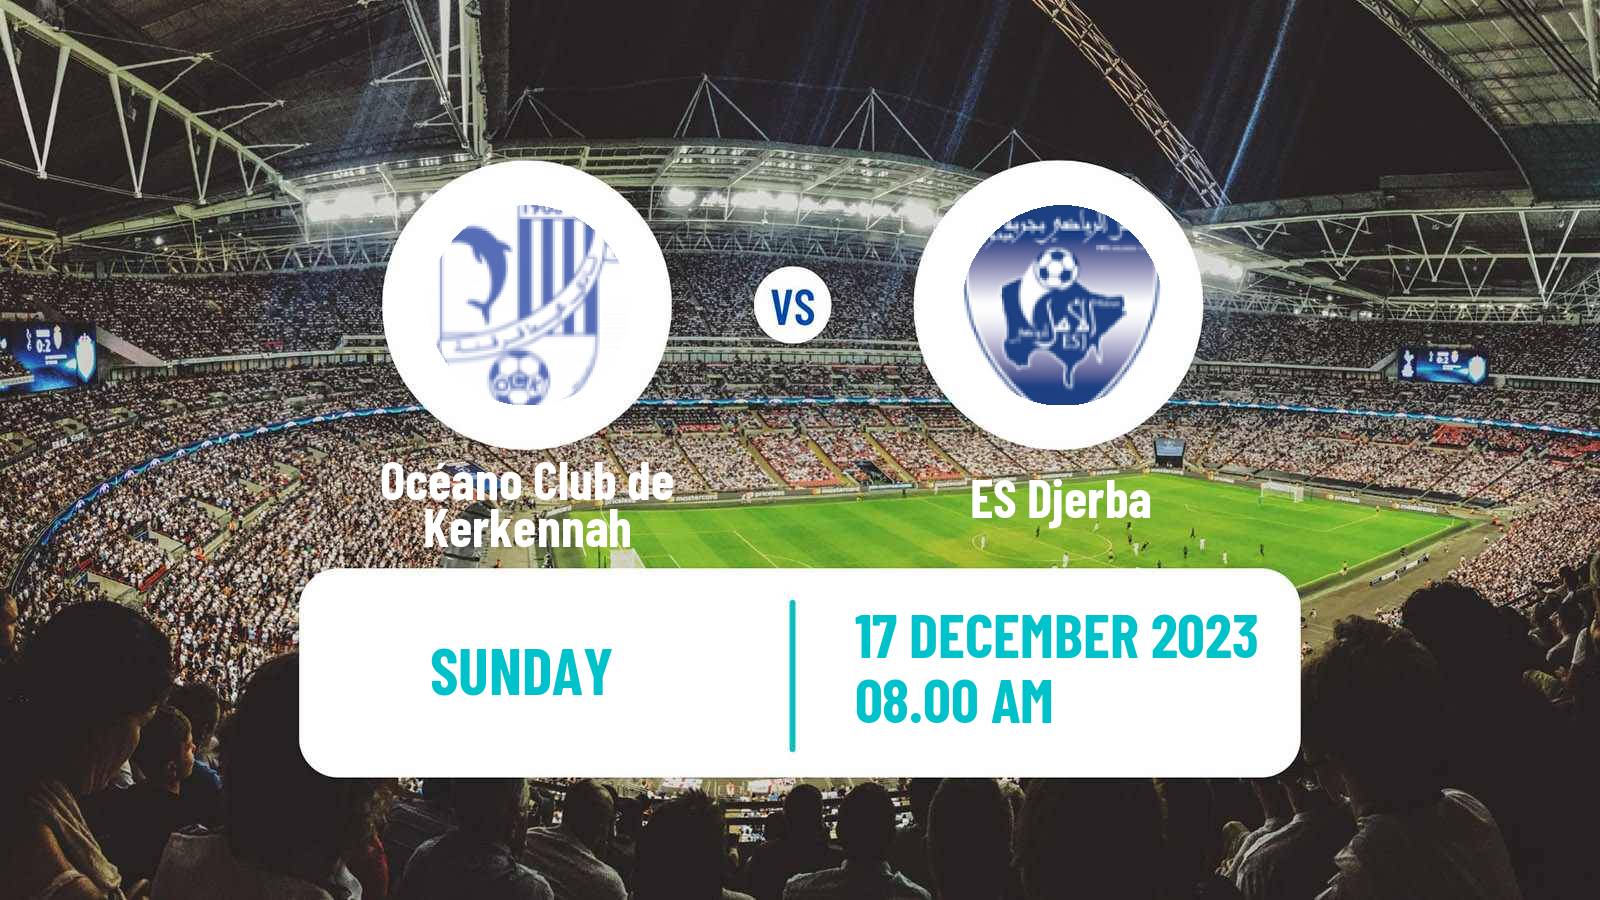 Soccer Tunisian Ligue 2 Océano Club de Kerkennah - ES Djerba